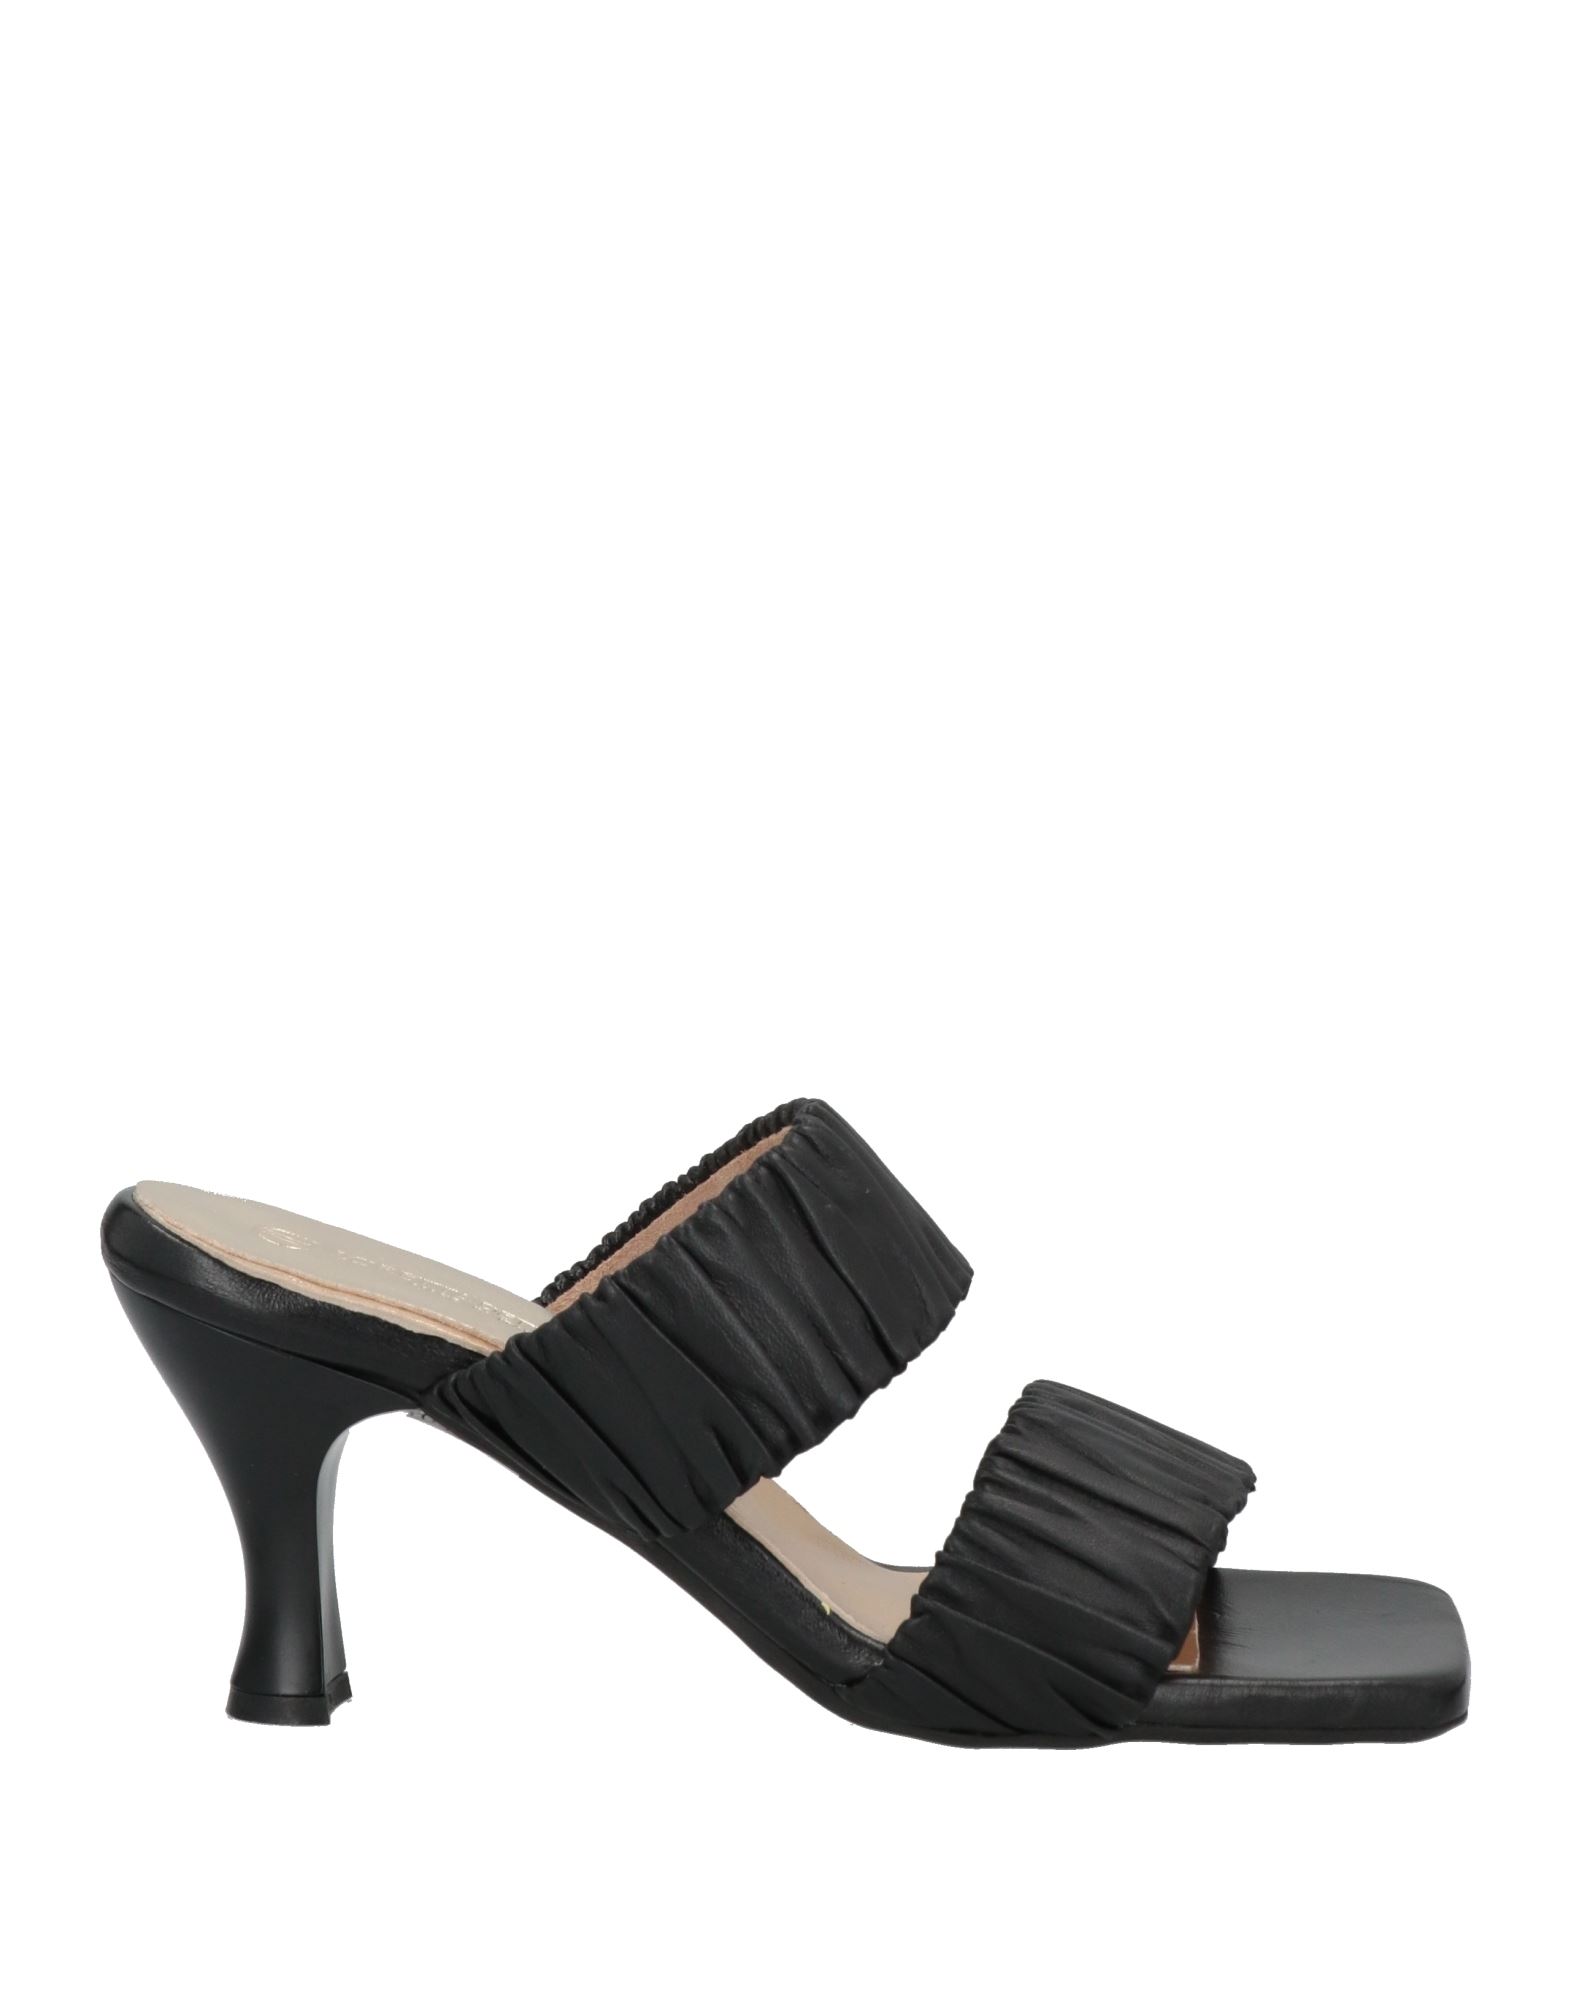 Loretta Pettinari Sandals In Black